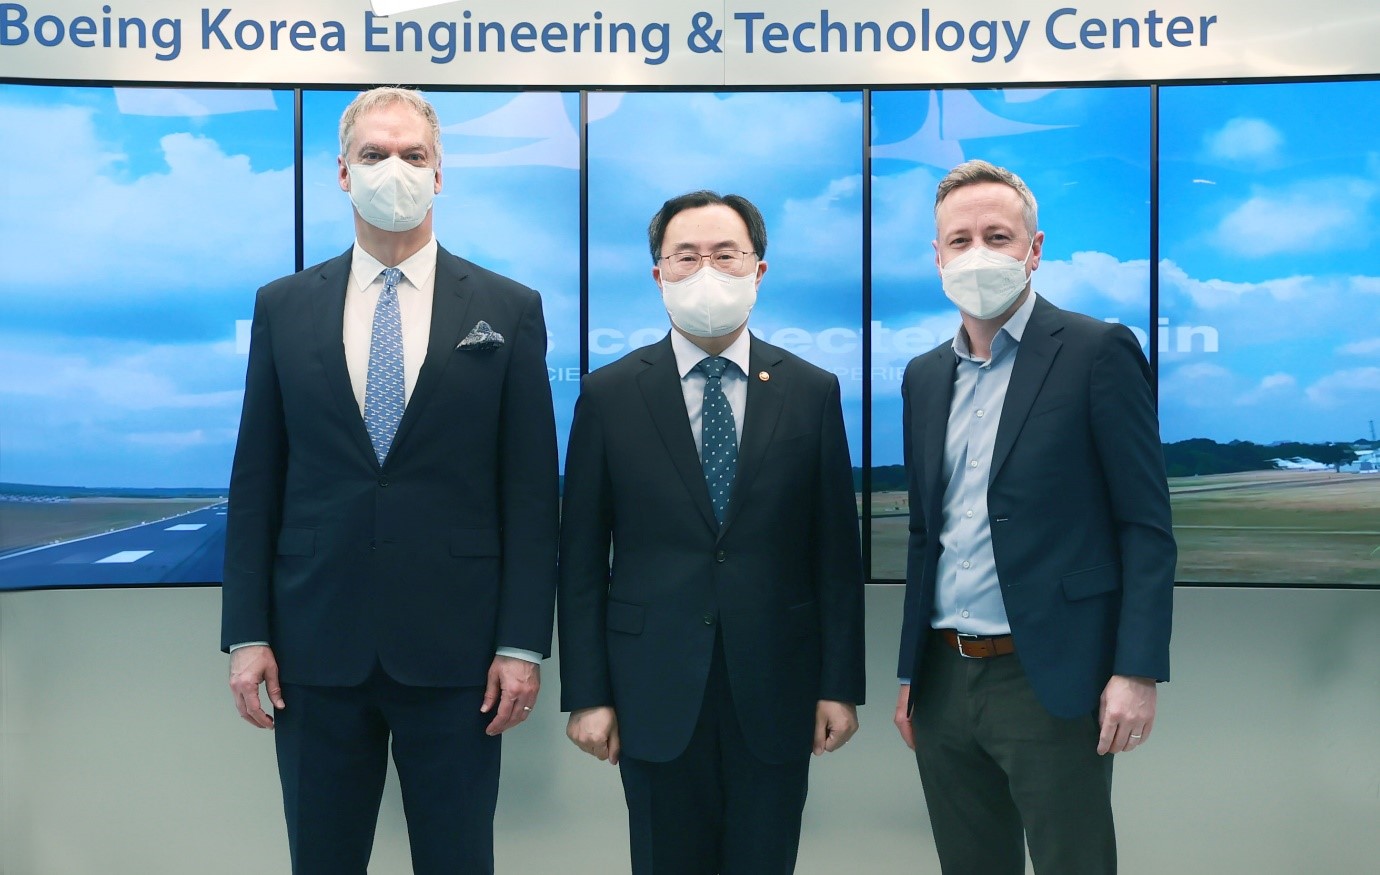 Minister Moon visits Boeing Korea Engineering & Technology Center